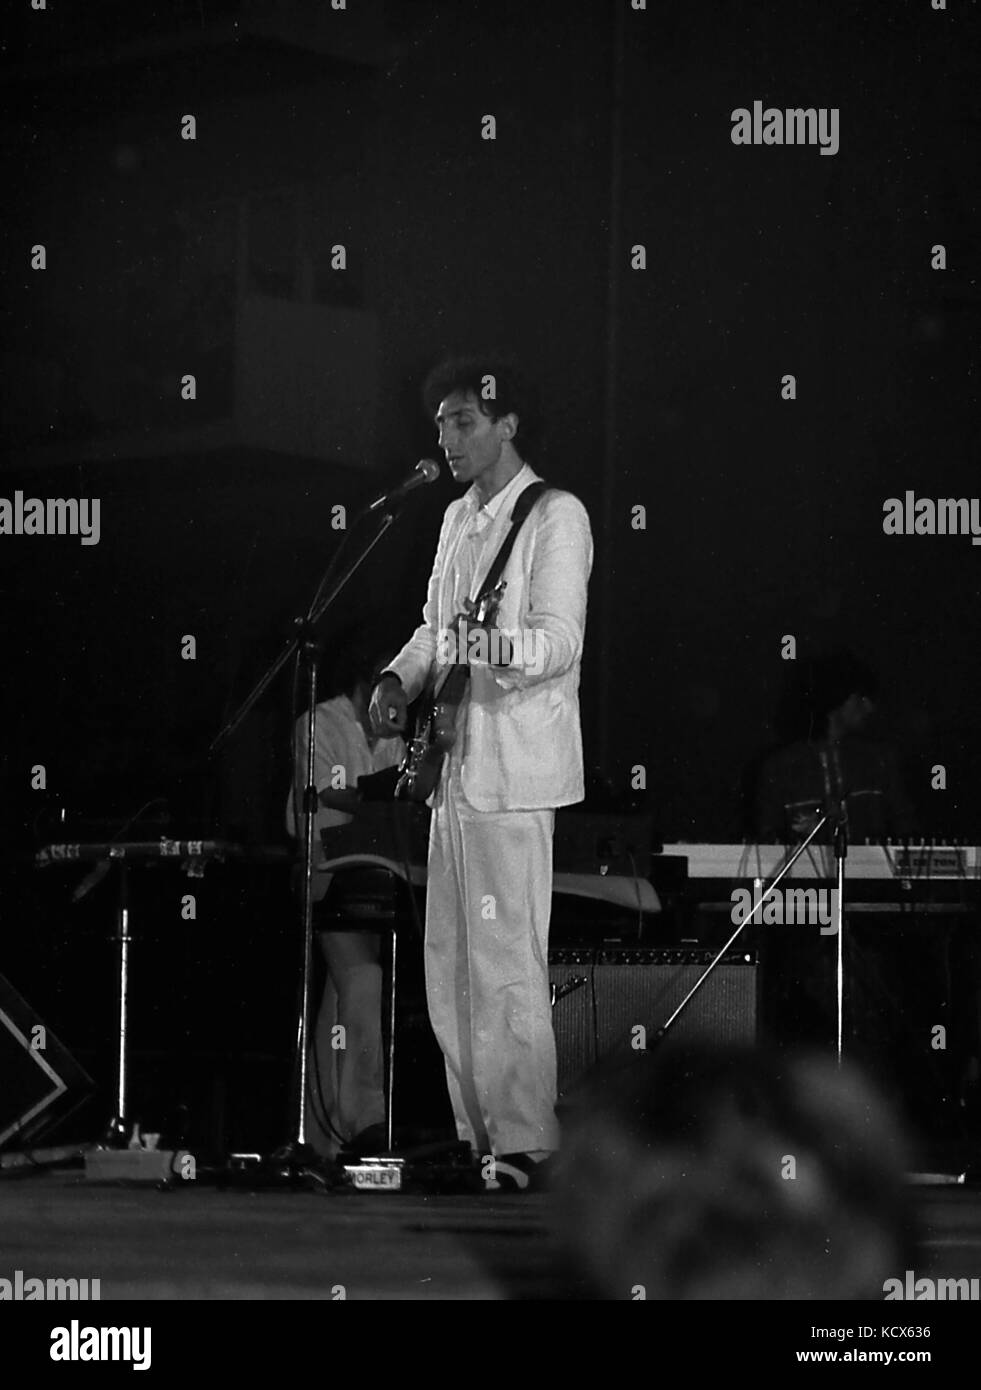 Franco Battiato in concert, Alessandria (Italy), 1981 (1) Stock Photo